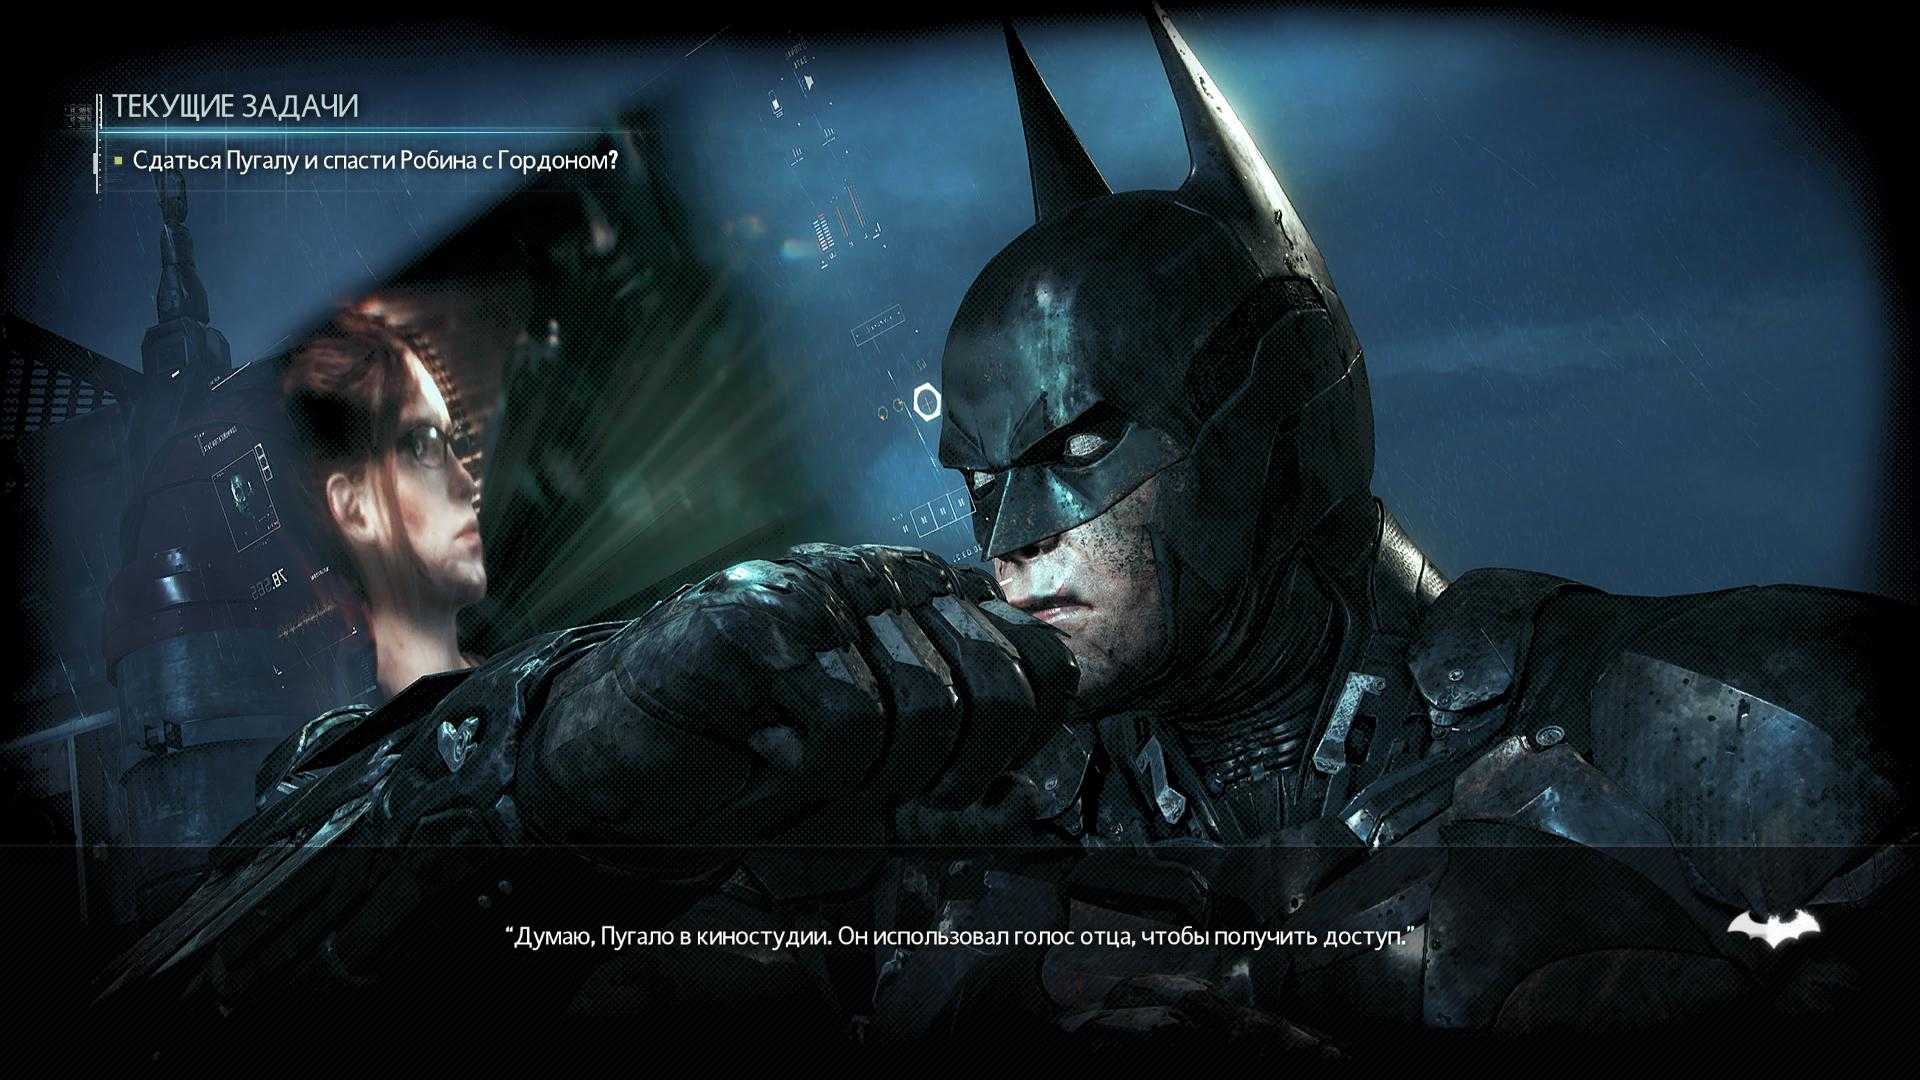 Batman: arkham knight (batman: рыцарь аркхема) - трофеи (ачивки, достижения) для pc, ps4 и xbox one